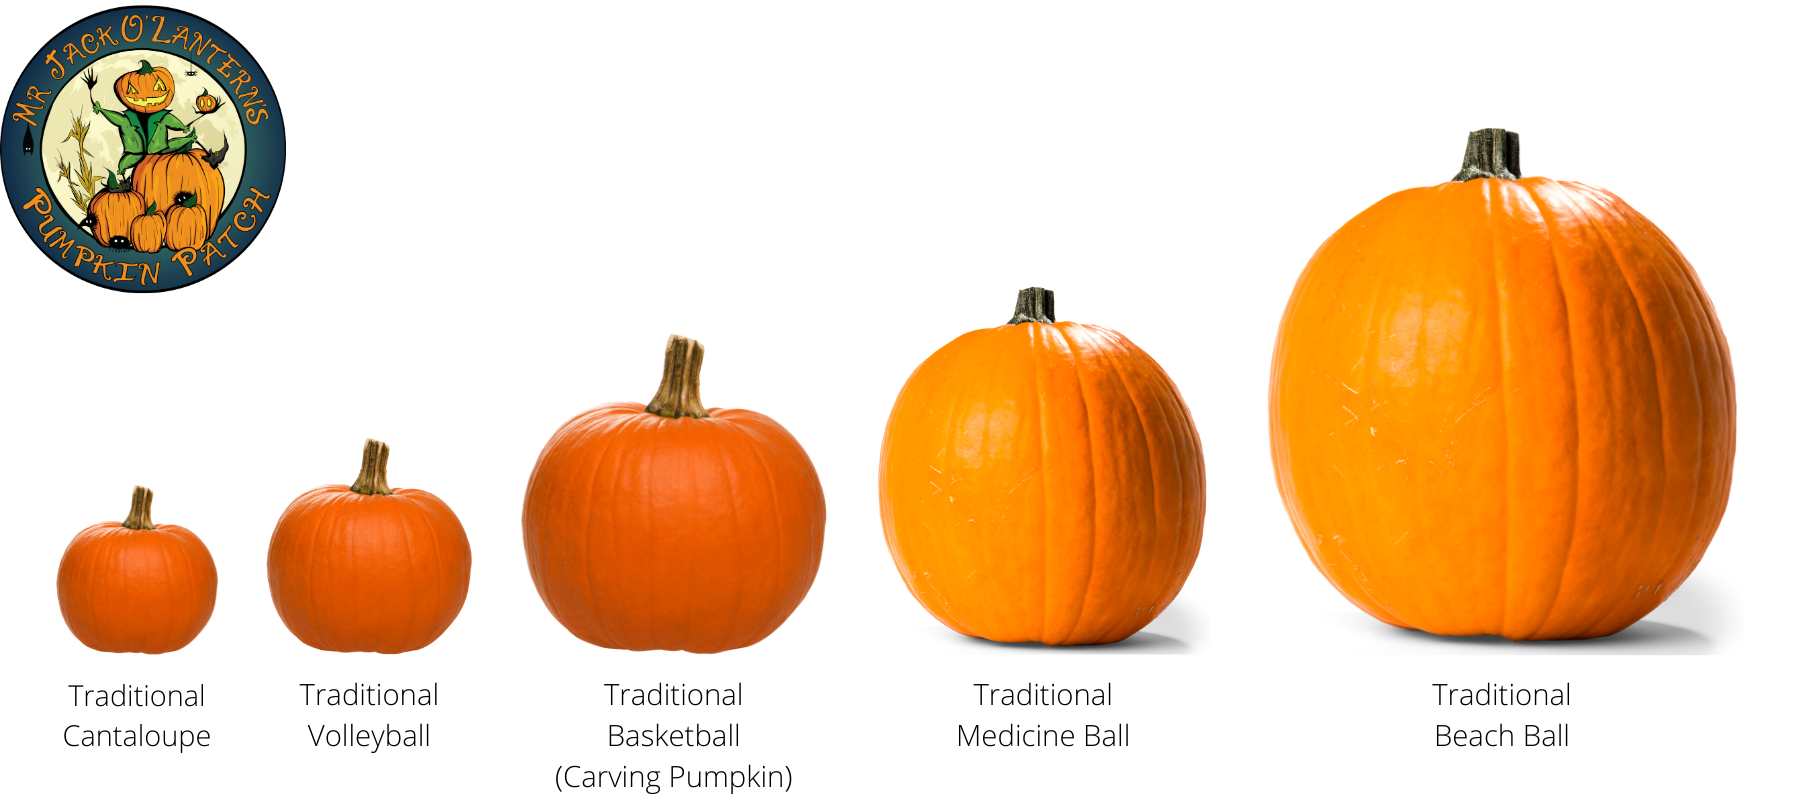 Traditional Basketball (Carving Pumpkin) - San Diego